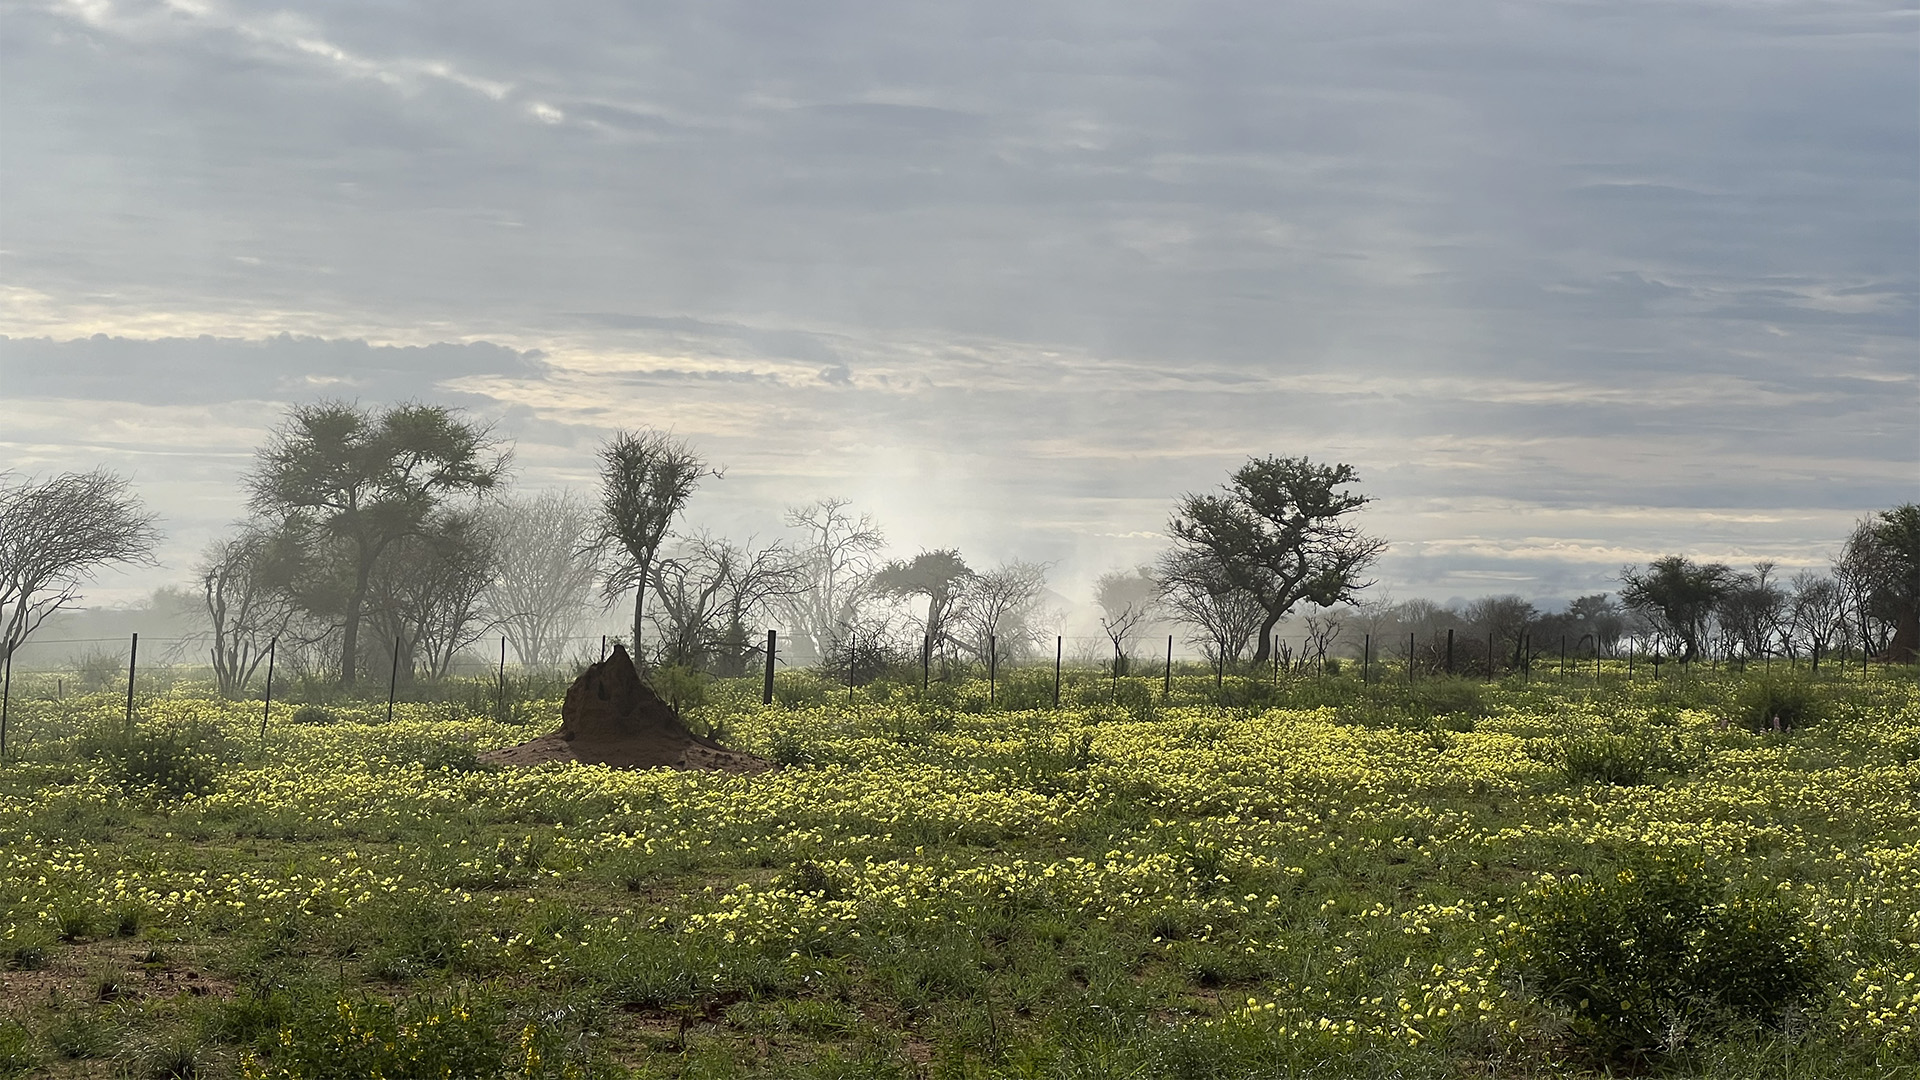 Rainy season in the savannah of southern Africa